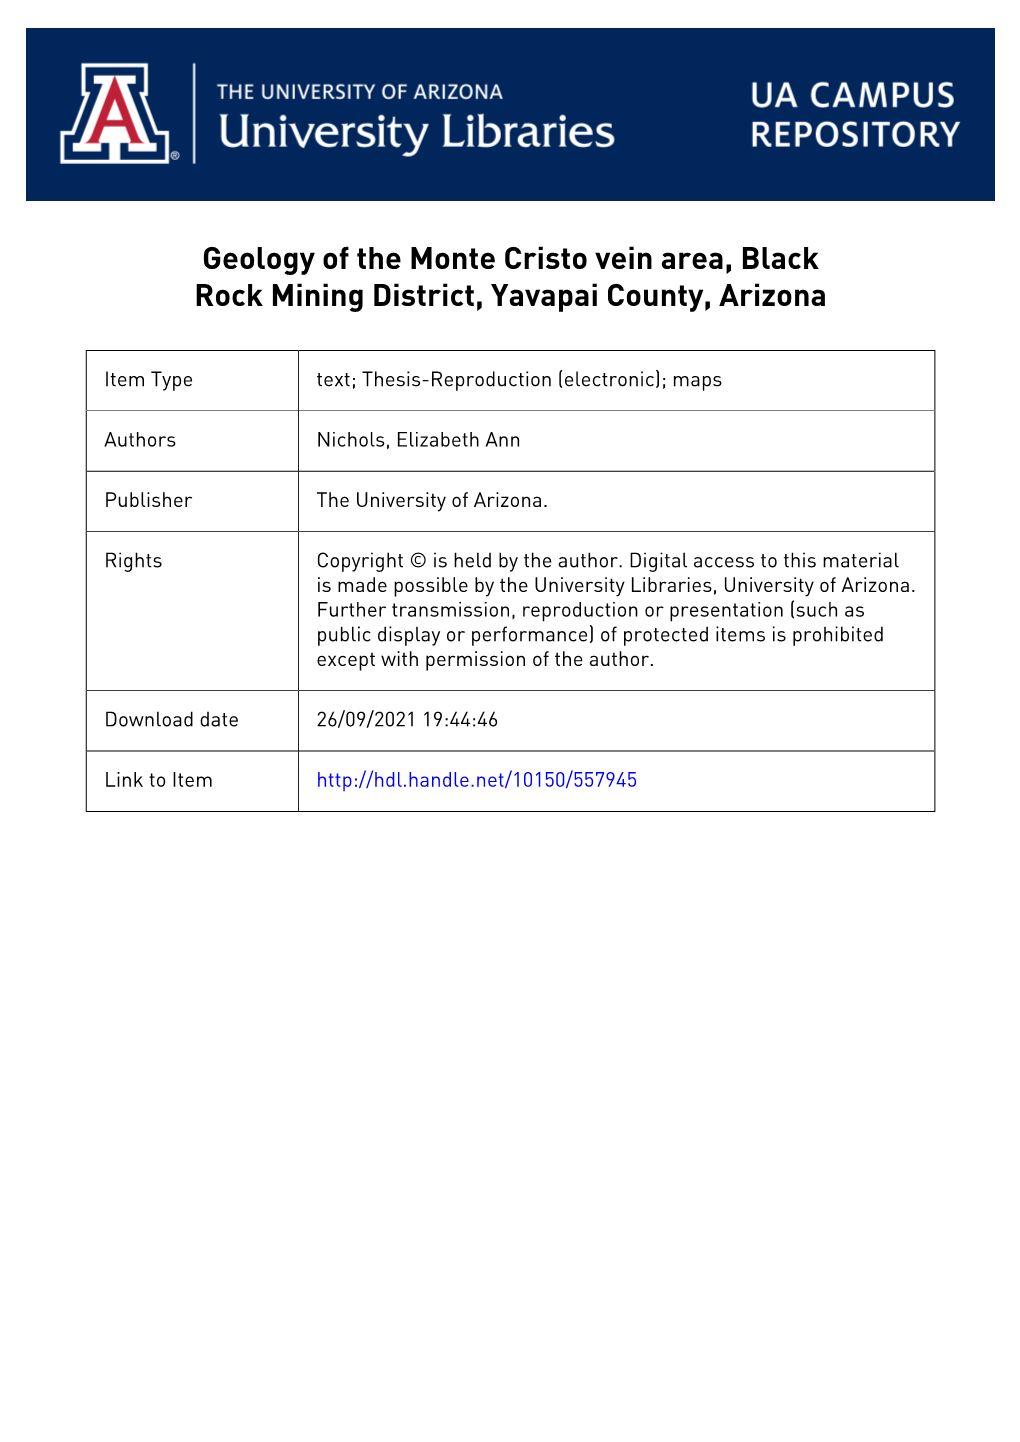 Geology of the Monte Cristo Vein Area, Biack Rock Mining